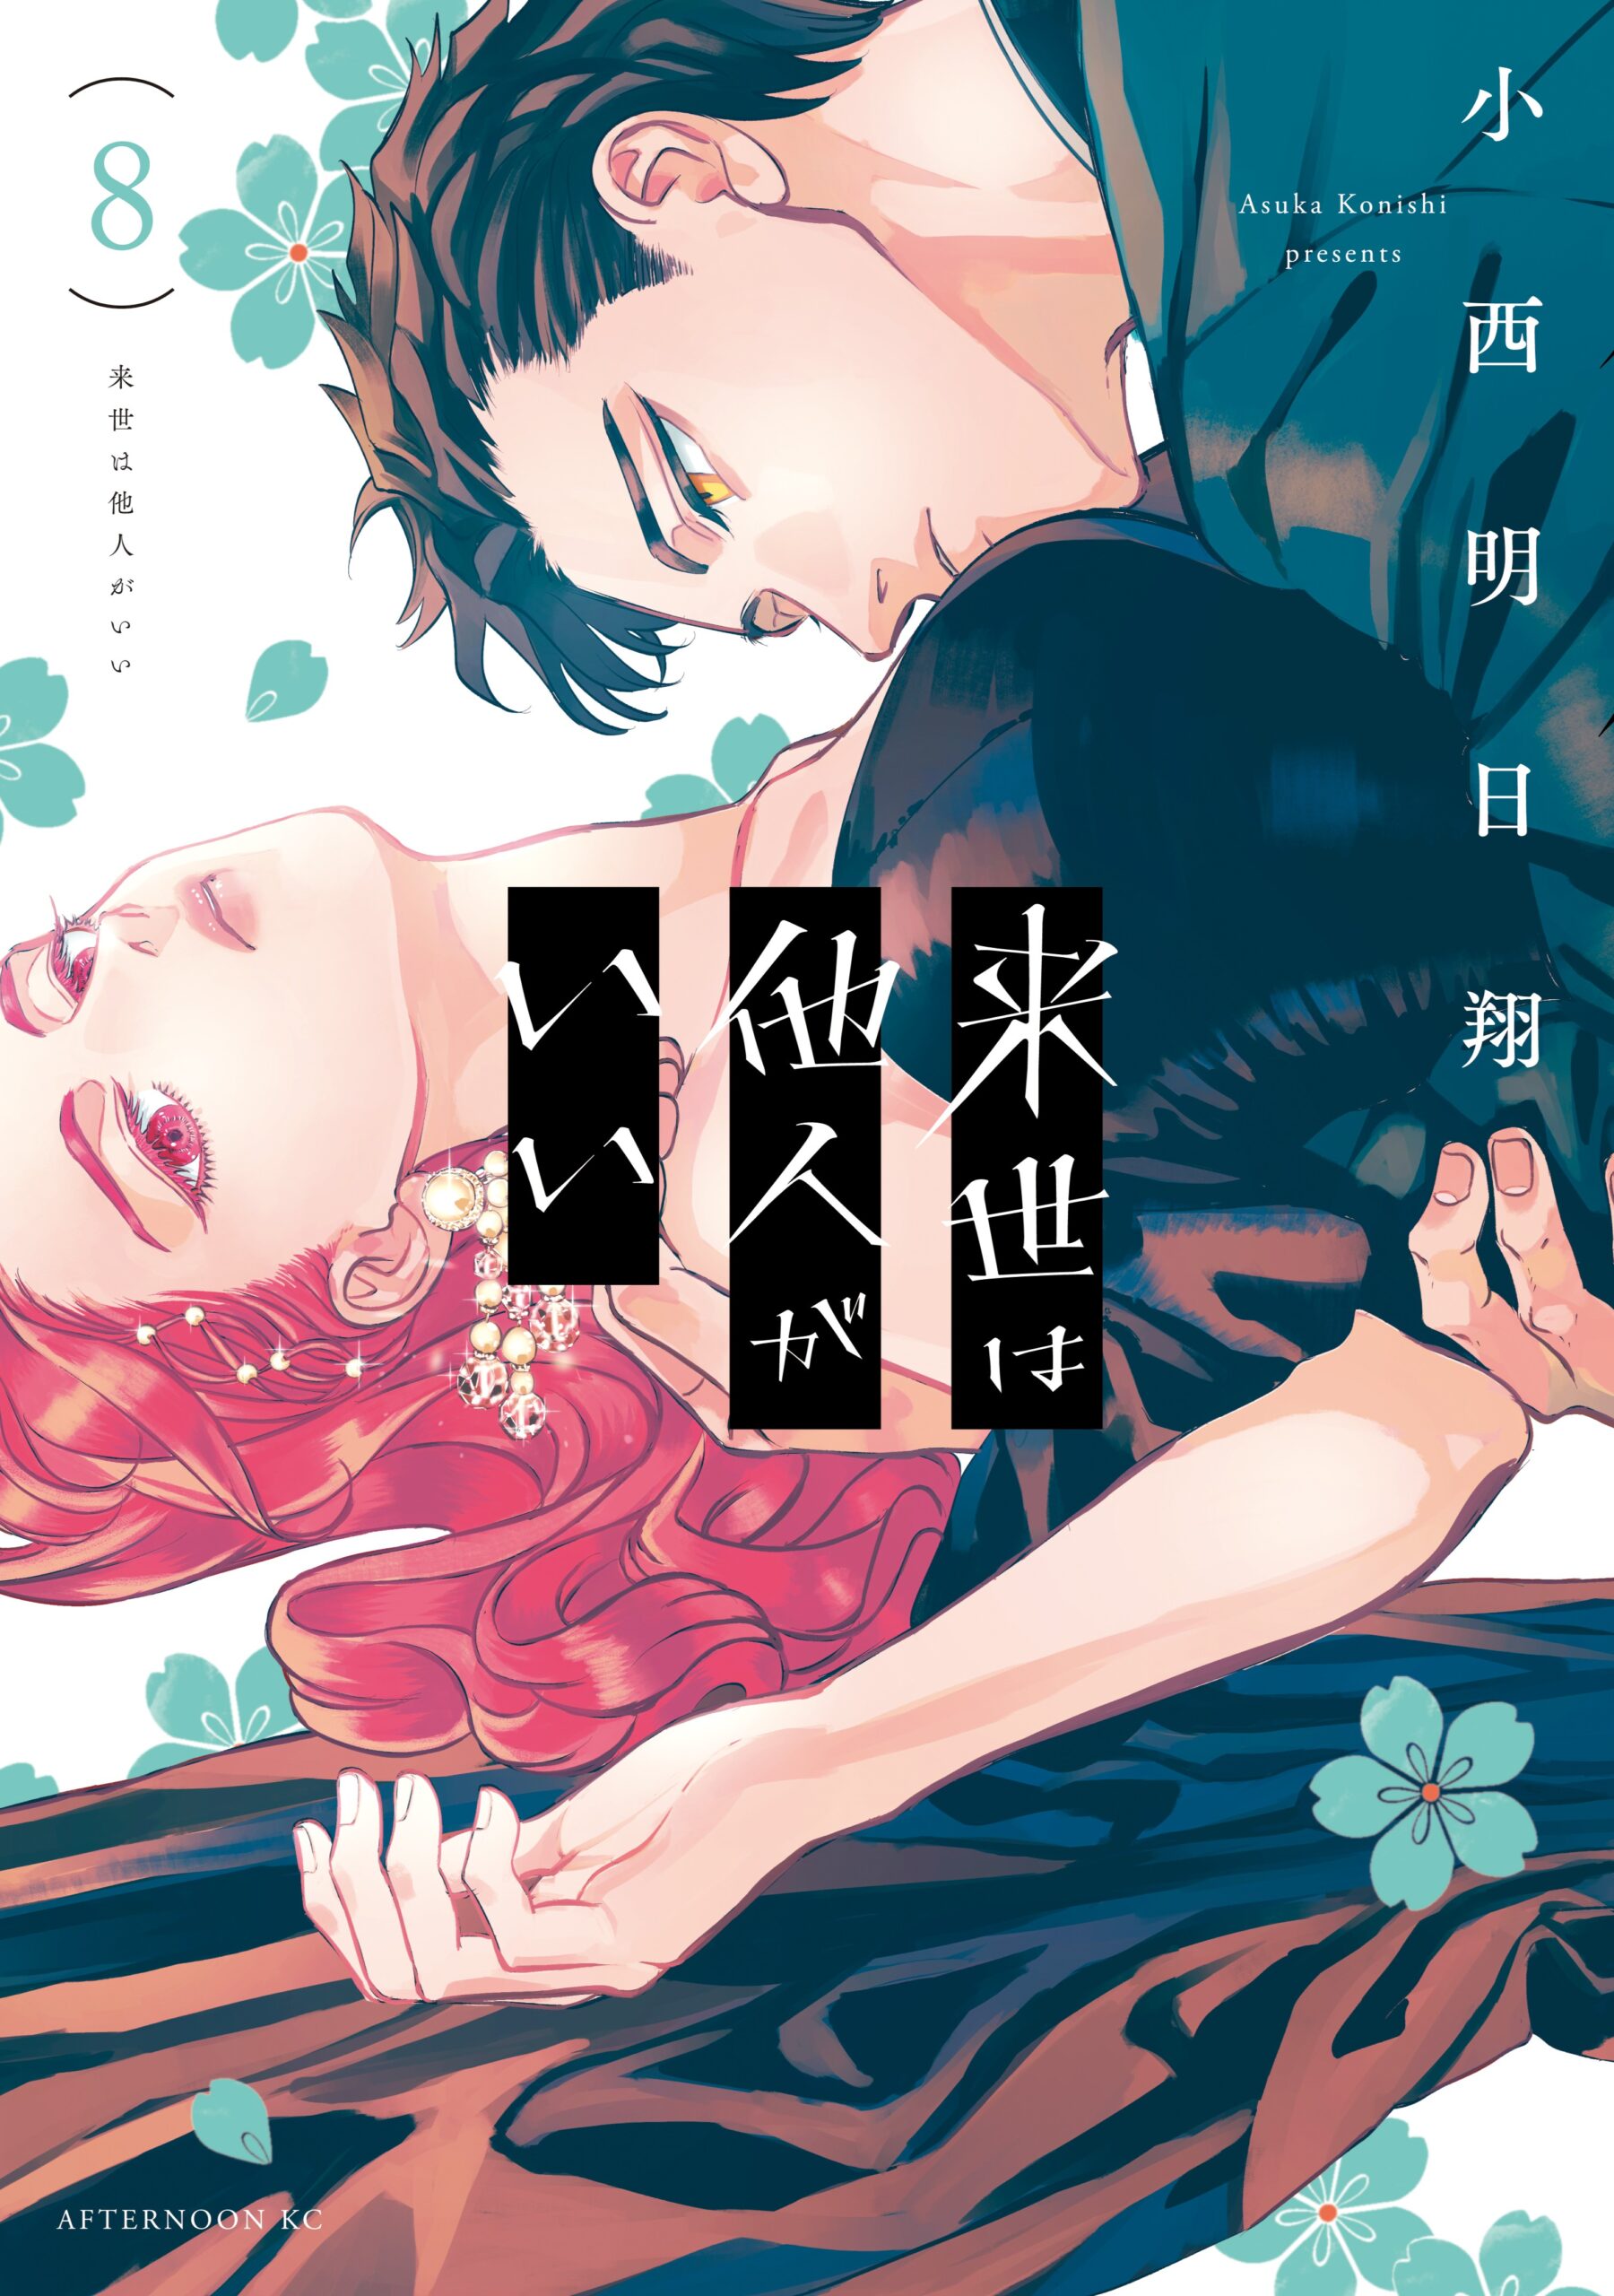 Yakuza Fiancé- Raise wa Tanin ga Ii Manga Cover Volume 8